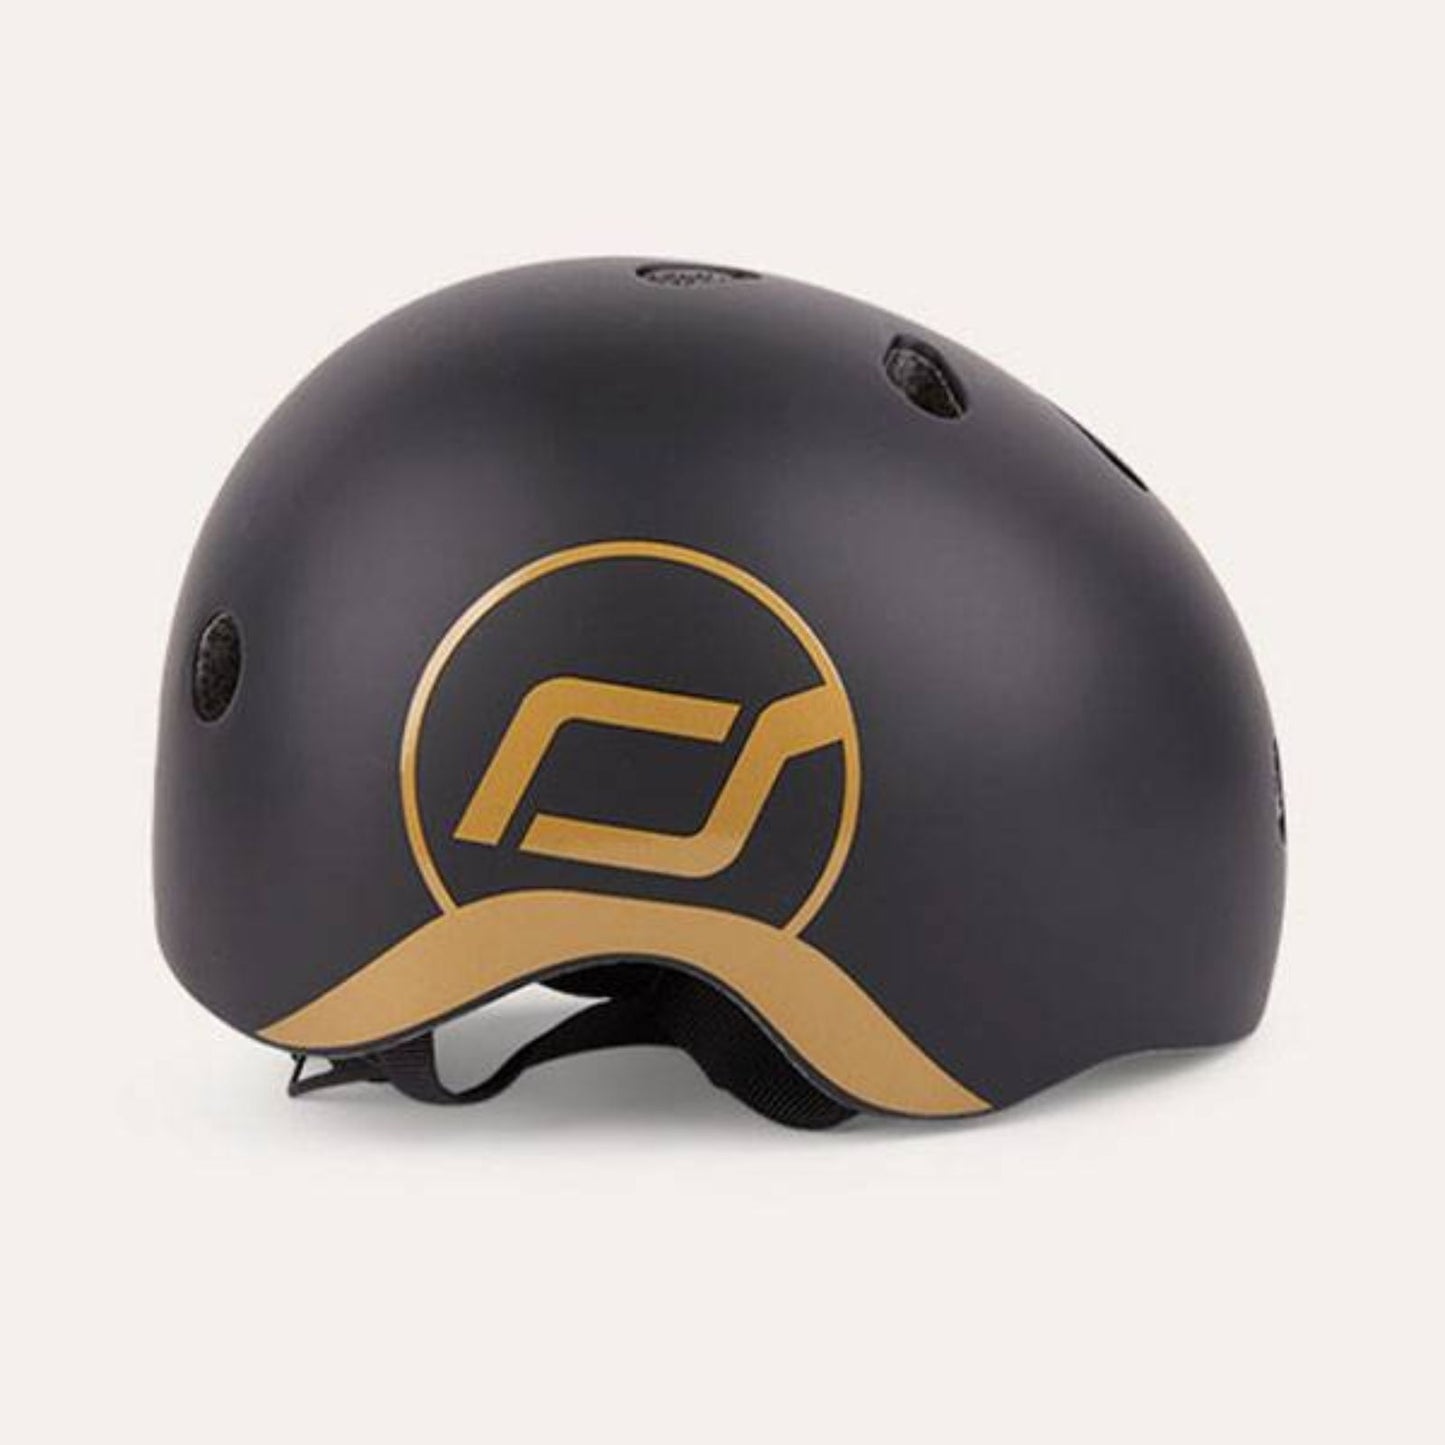 Scoot & Ride - Safety Helmet XXS-S (Gold Black)